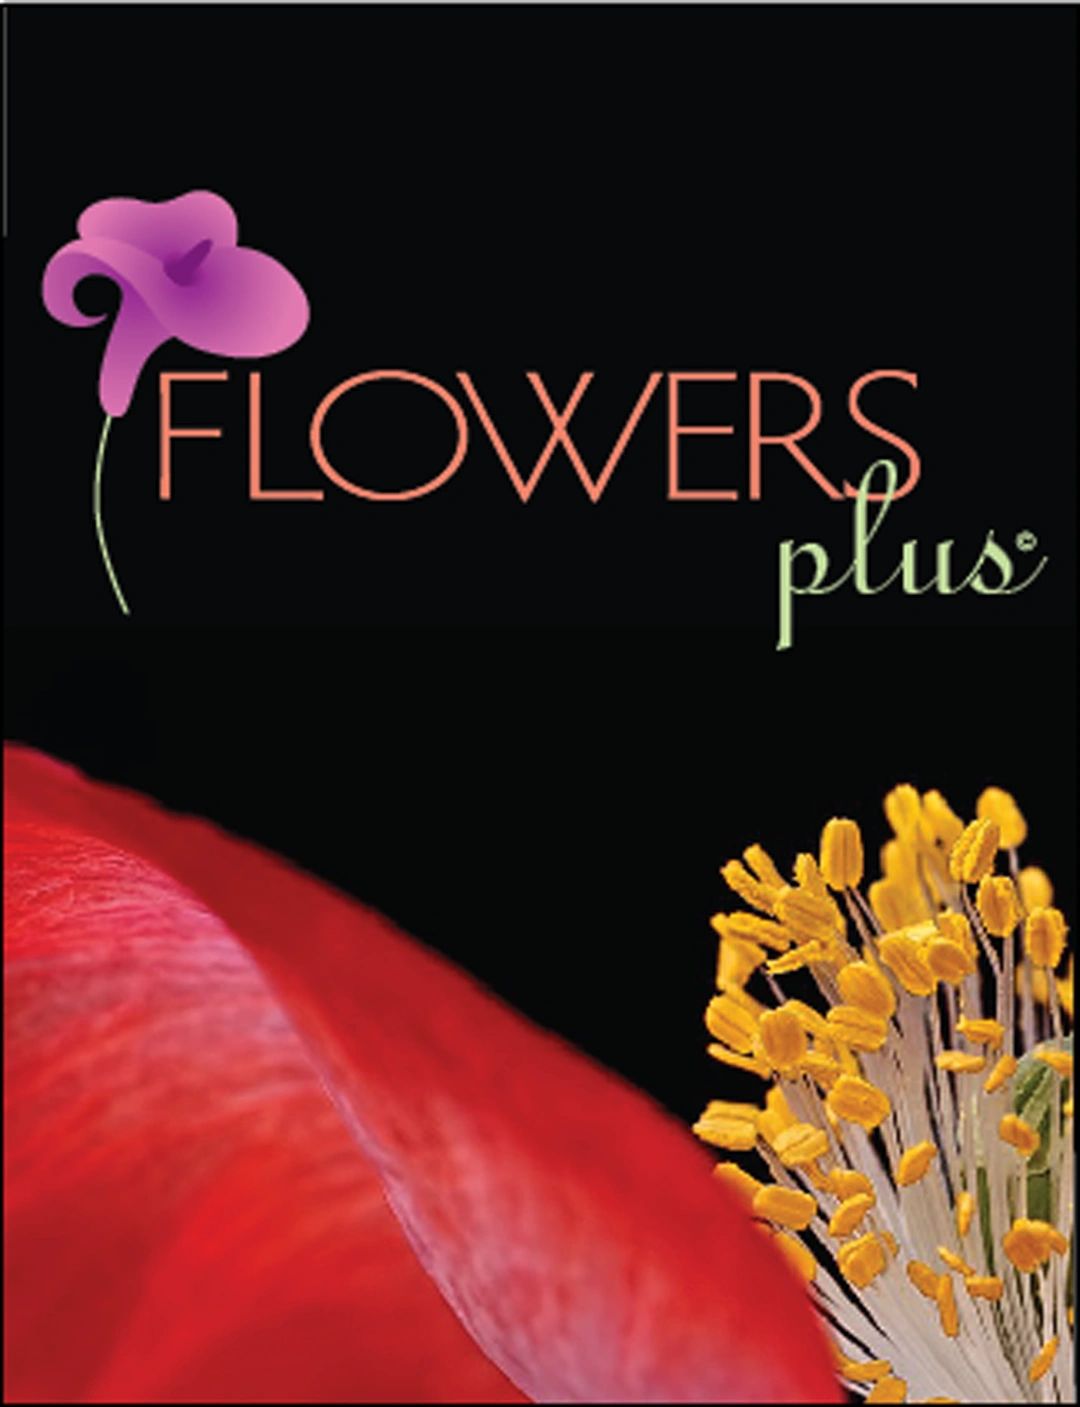 Flowers Plus full service florist in Charlotte NC
